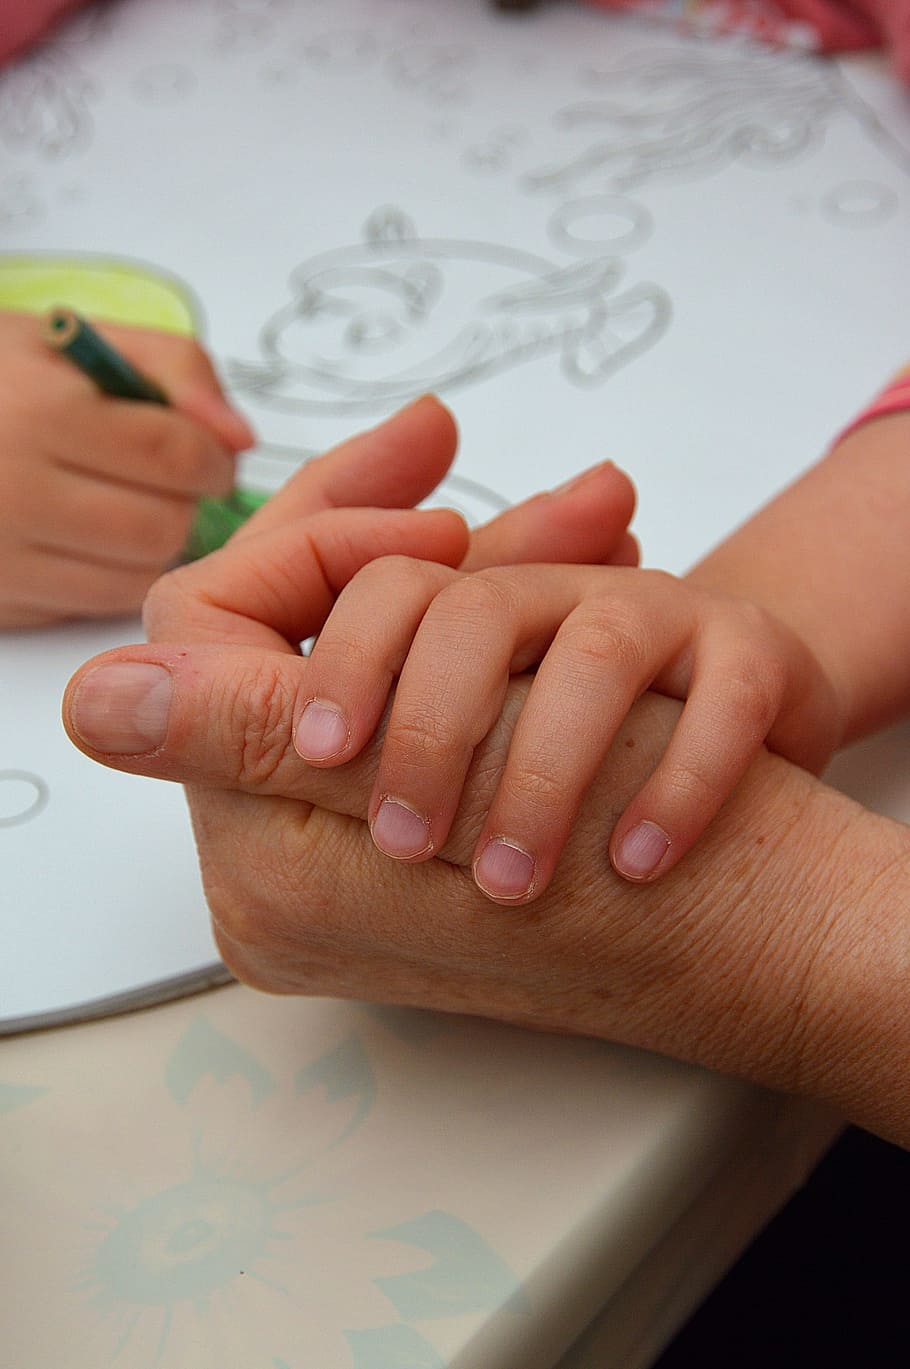 Hand, Hands, Child, Start, kid, start of, child's drawing, girl, human body part, human hand